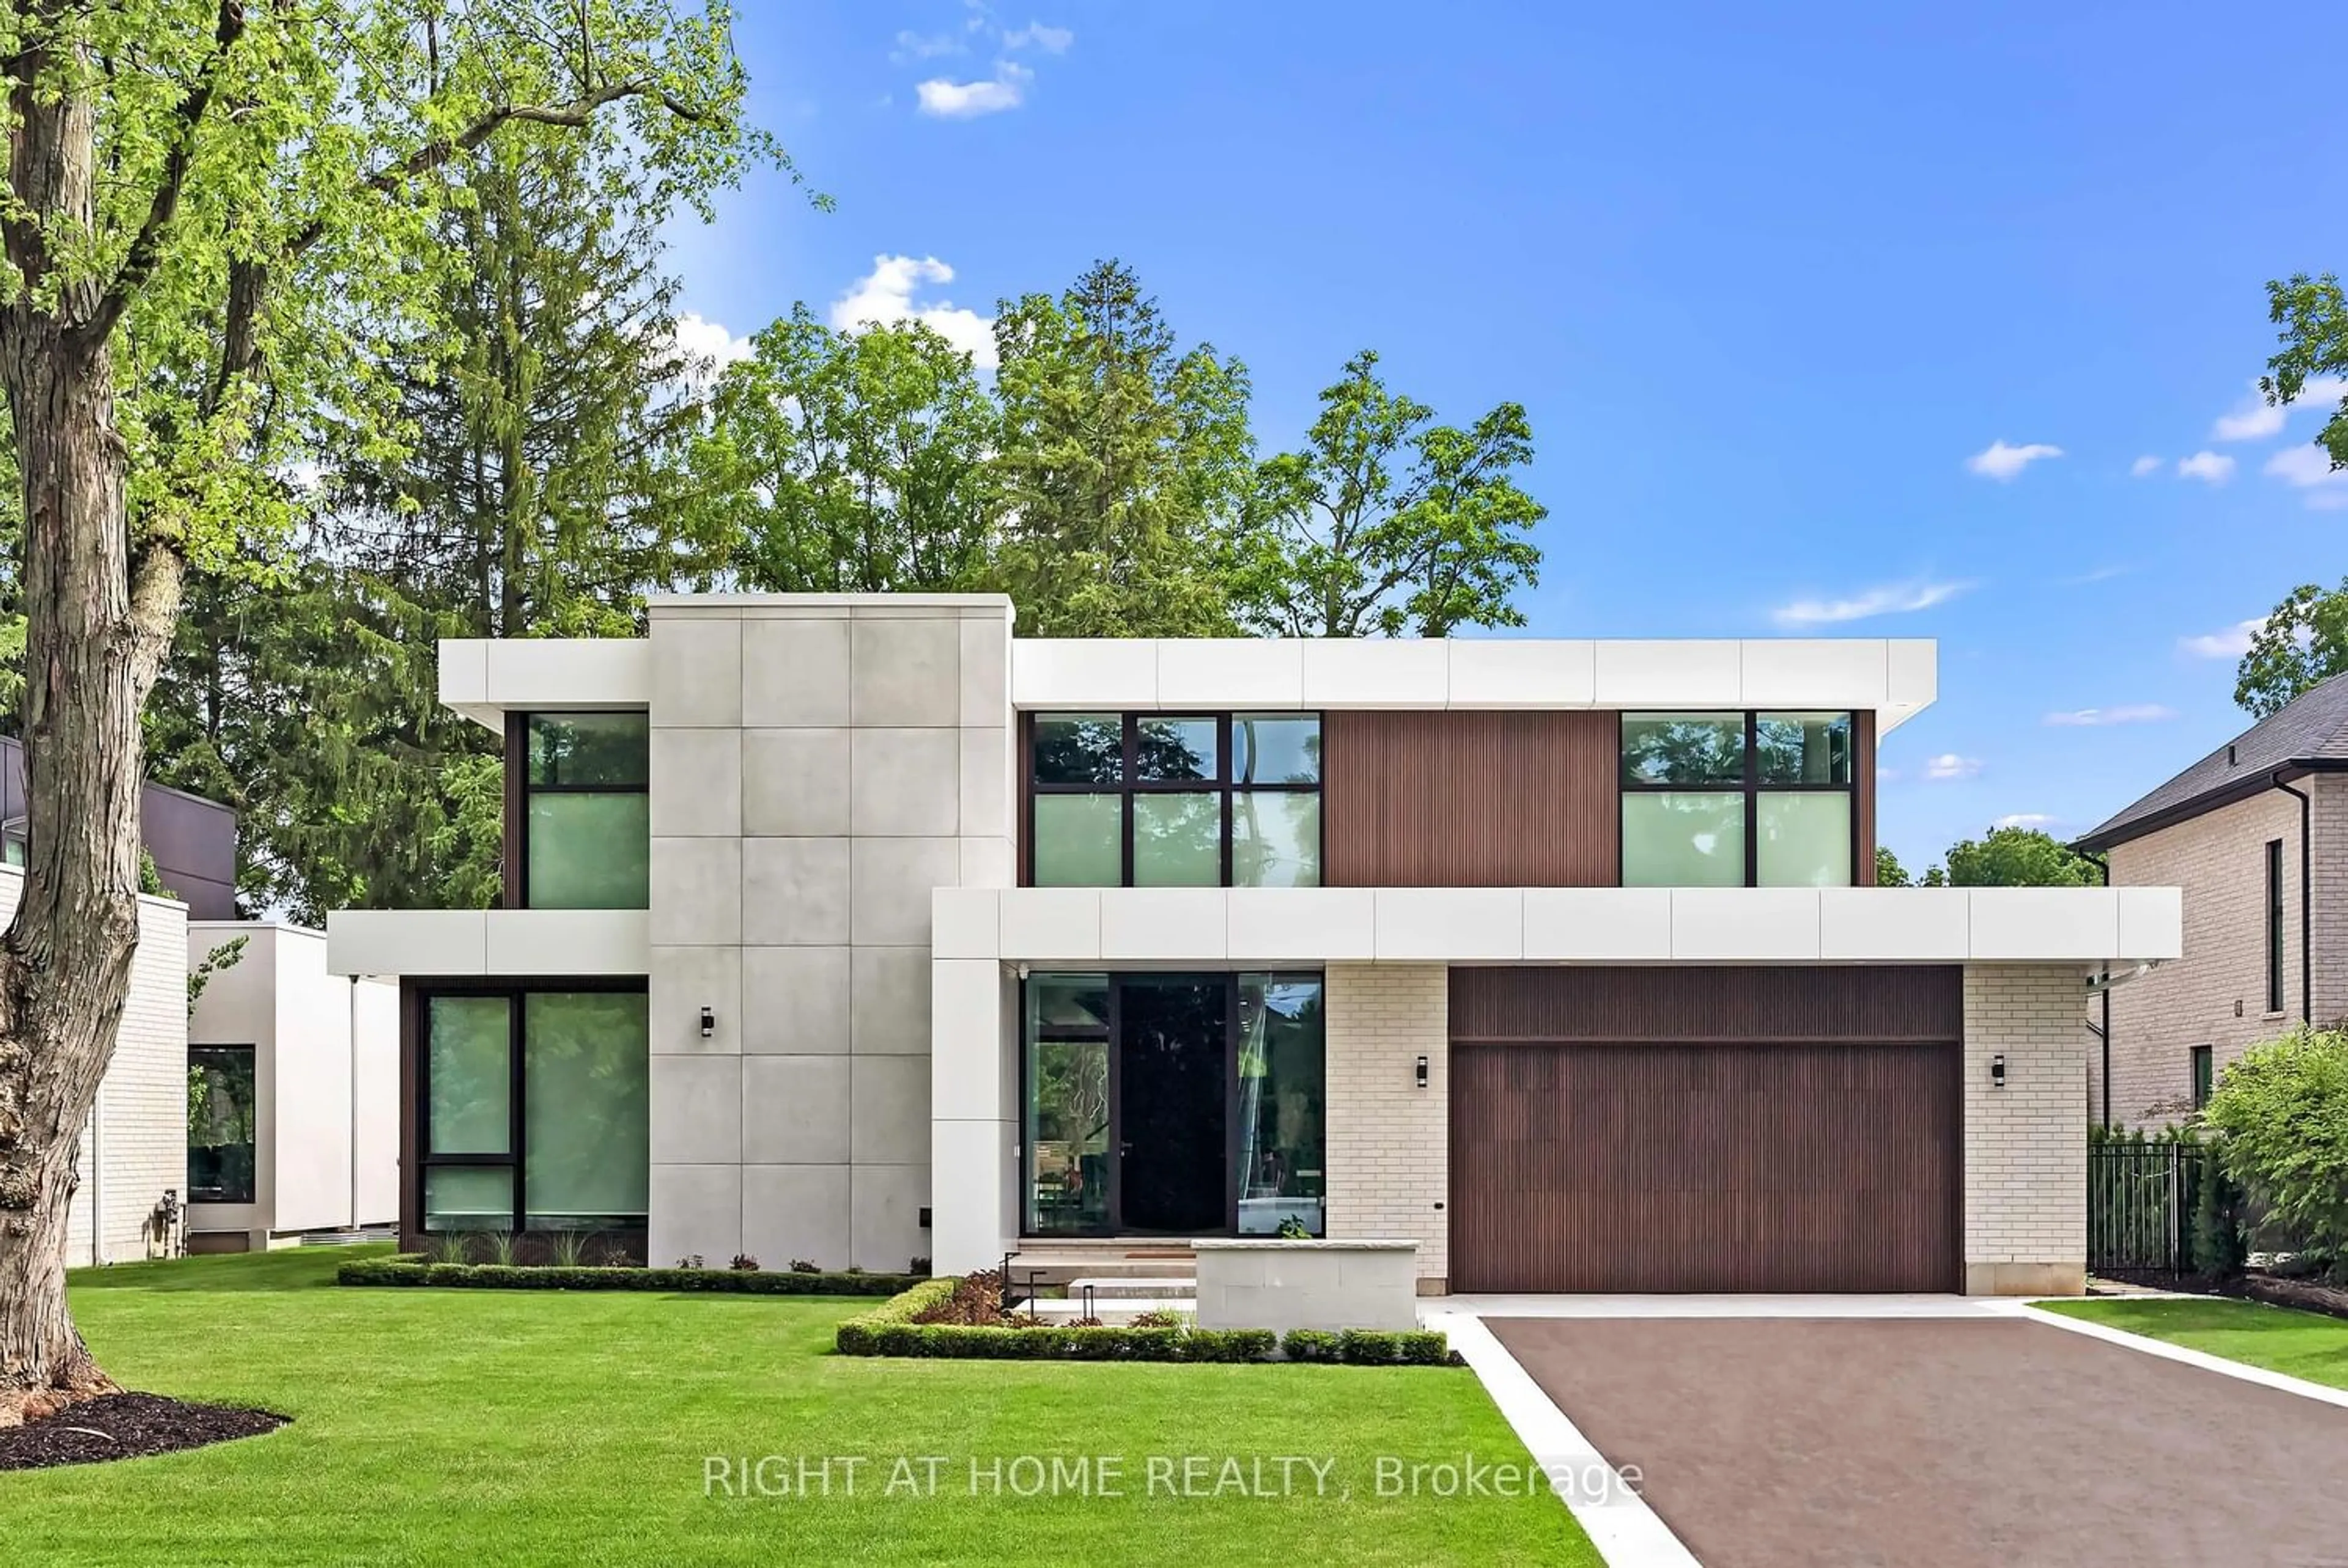 Home with brick exterior material for 148 Blair Lane, Hamilton Ontario L9G 1B7